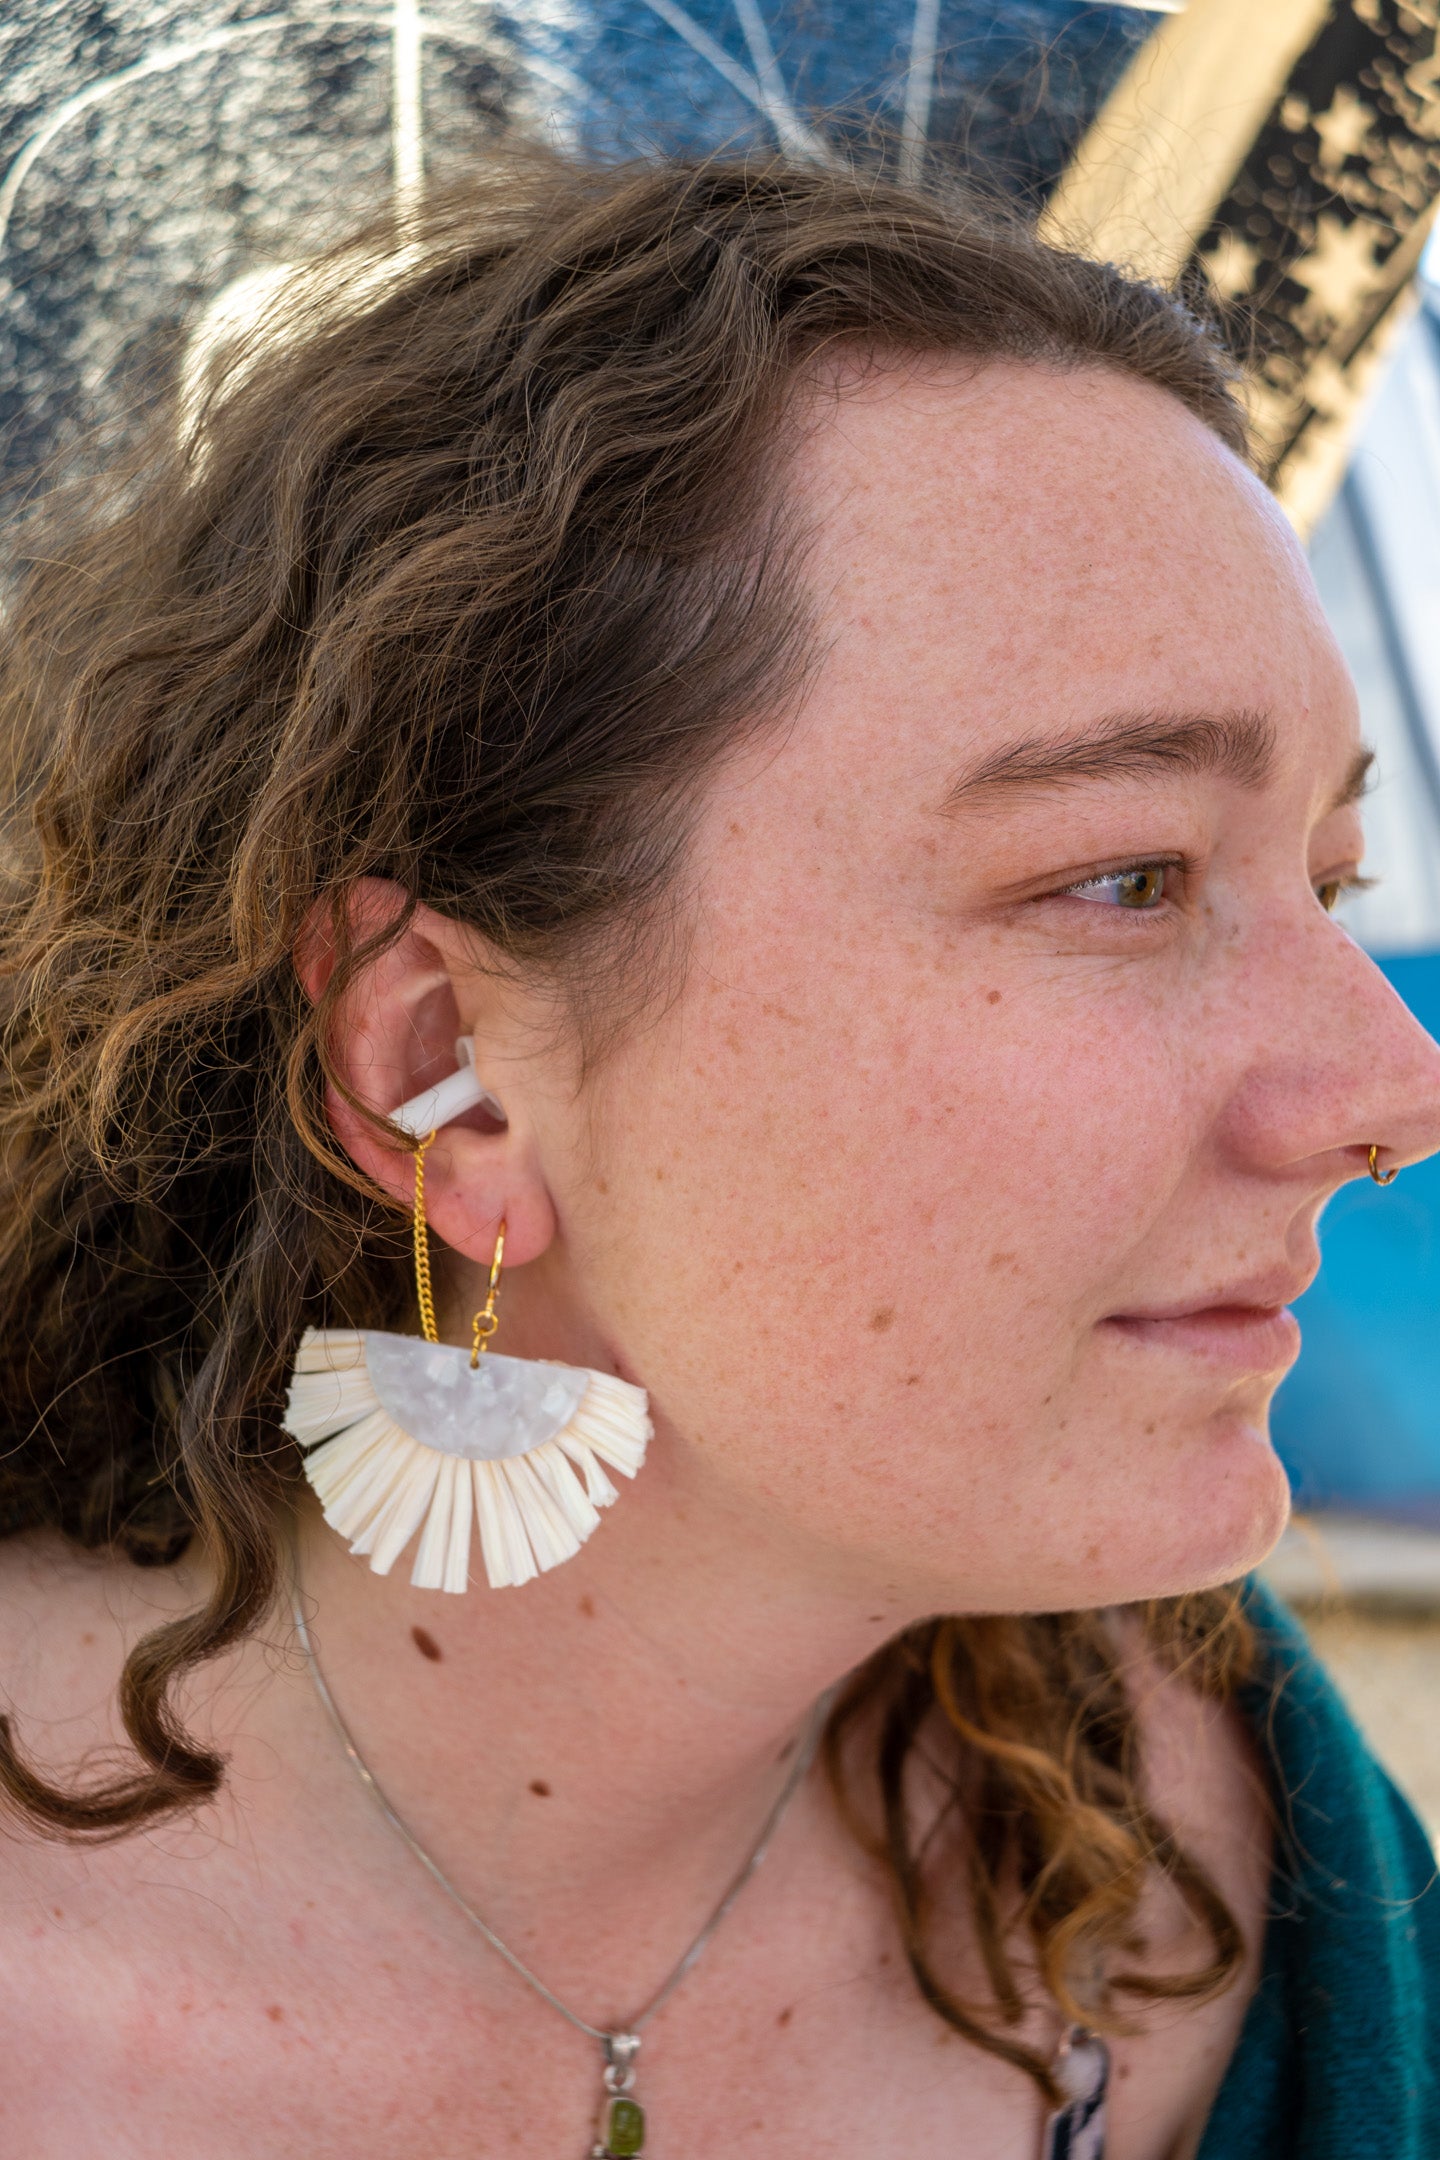 Music festival earplug earrings